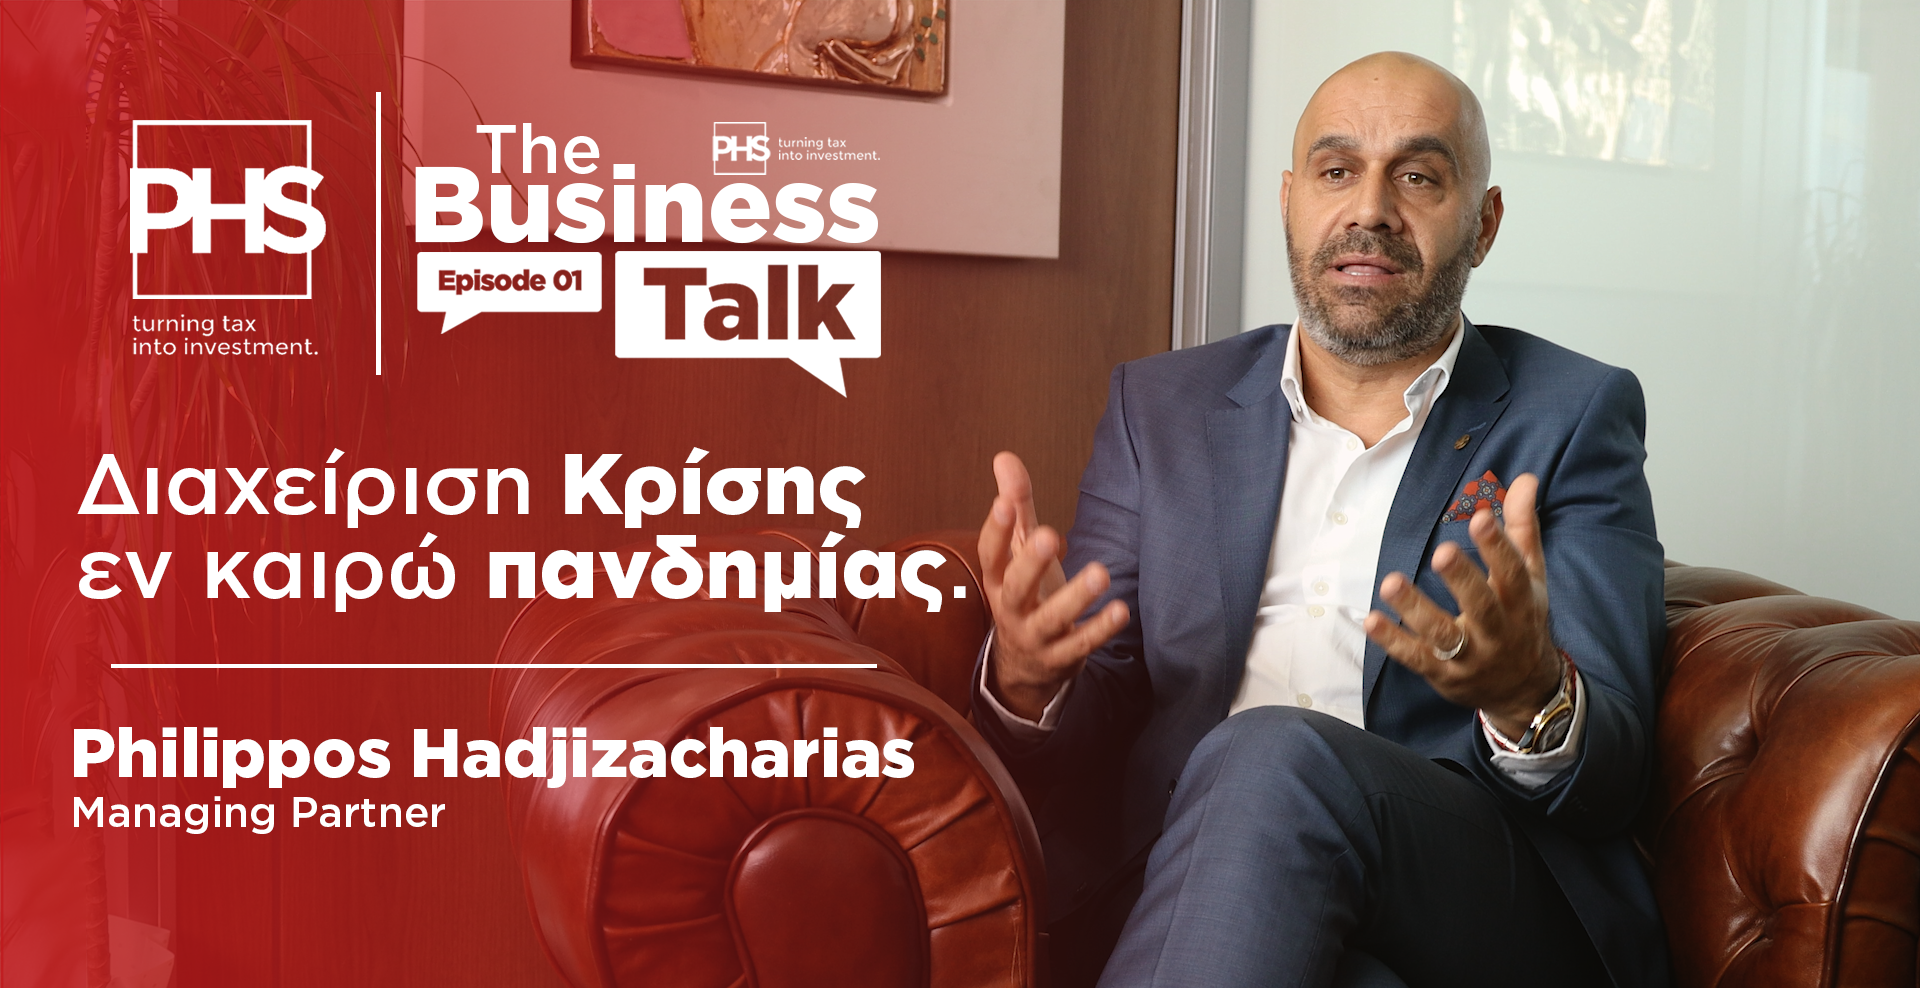 The Business Talk: Μια νέα επιχειρηματική εκπομπή που στηρίζει τις επιχειρήσεις